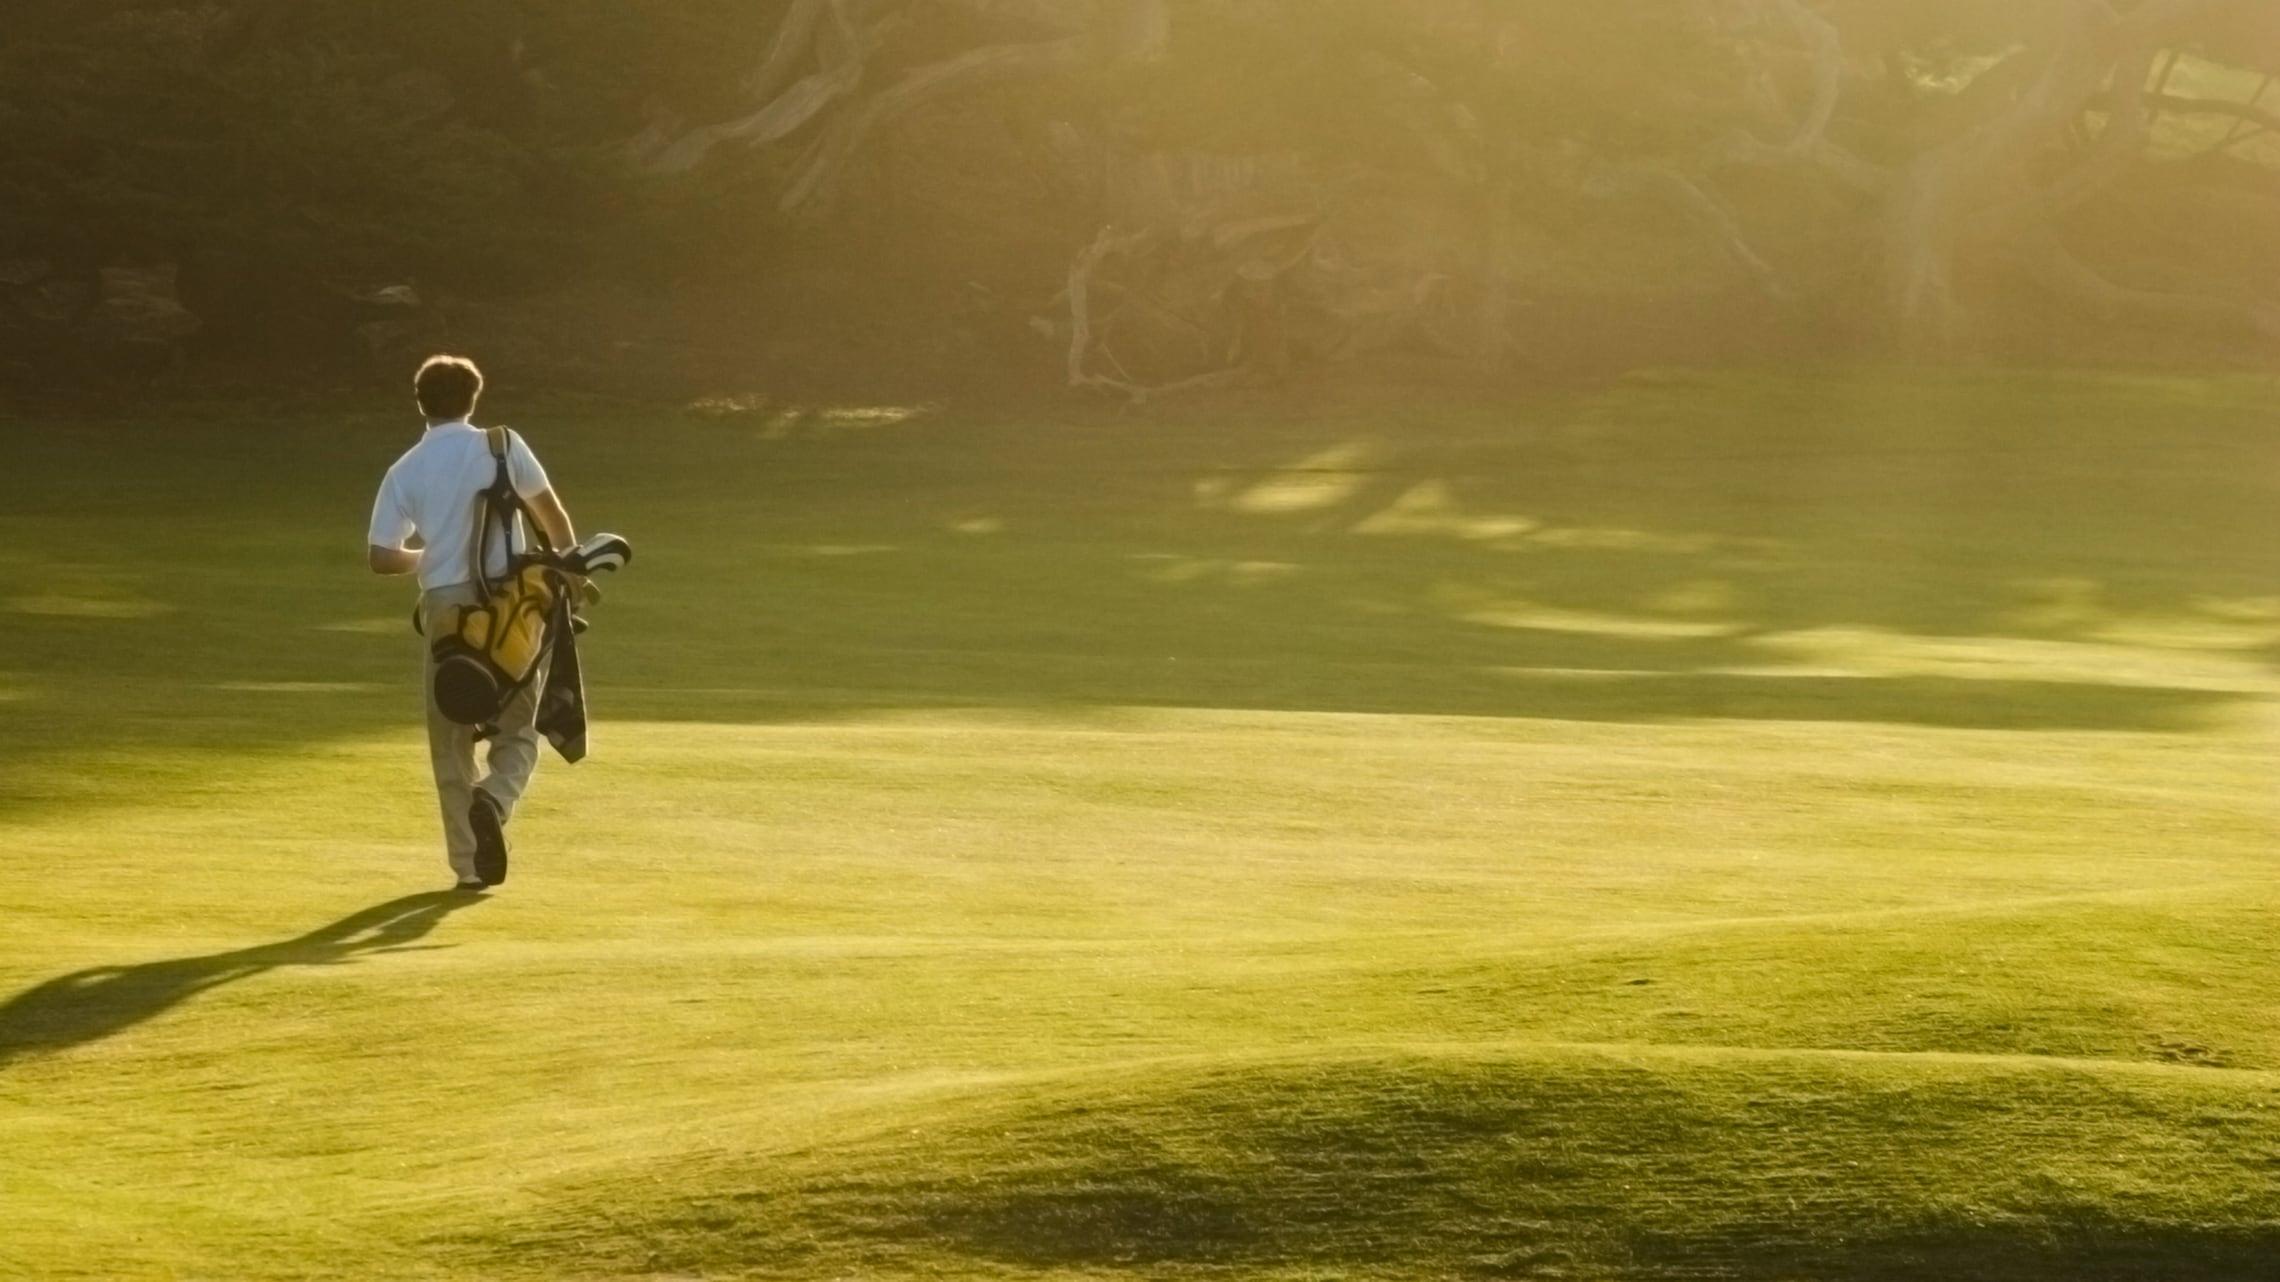 JW Marriott business hotels feature golf courses